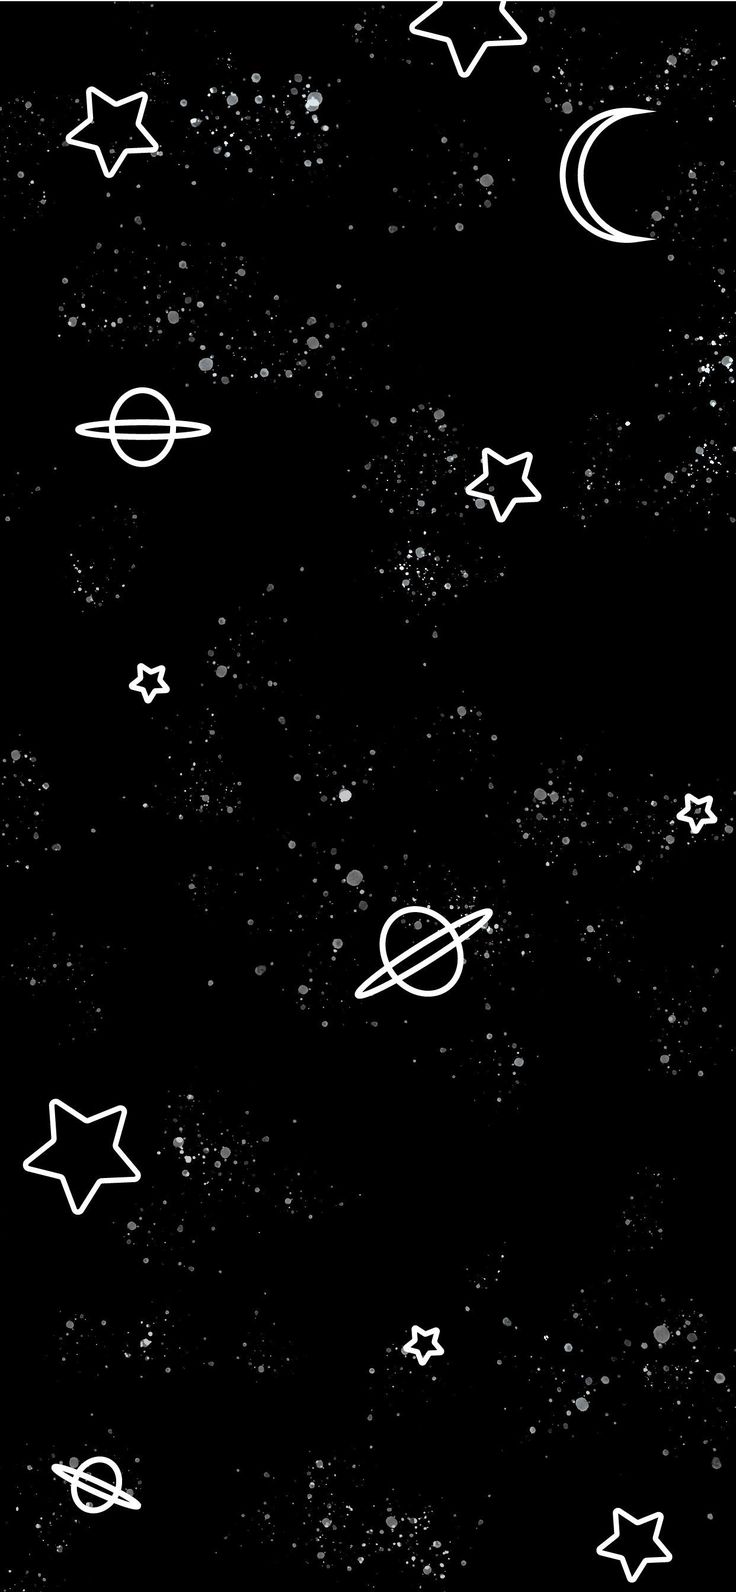 Black Cute iPhone Wallpaper. Space iphone wallpaper, Outer space wallpaper, Wallpaper space